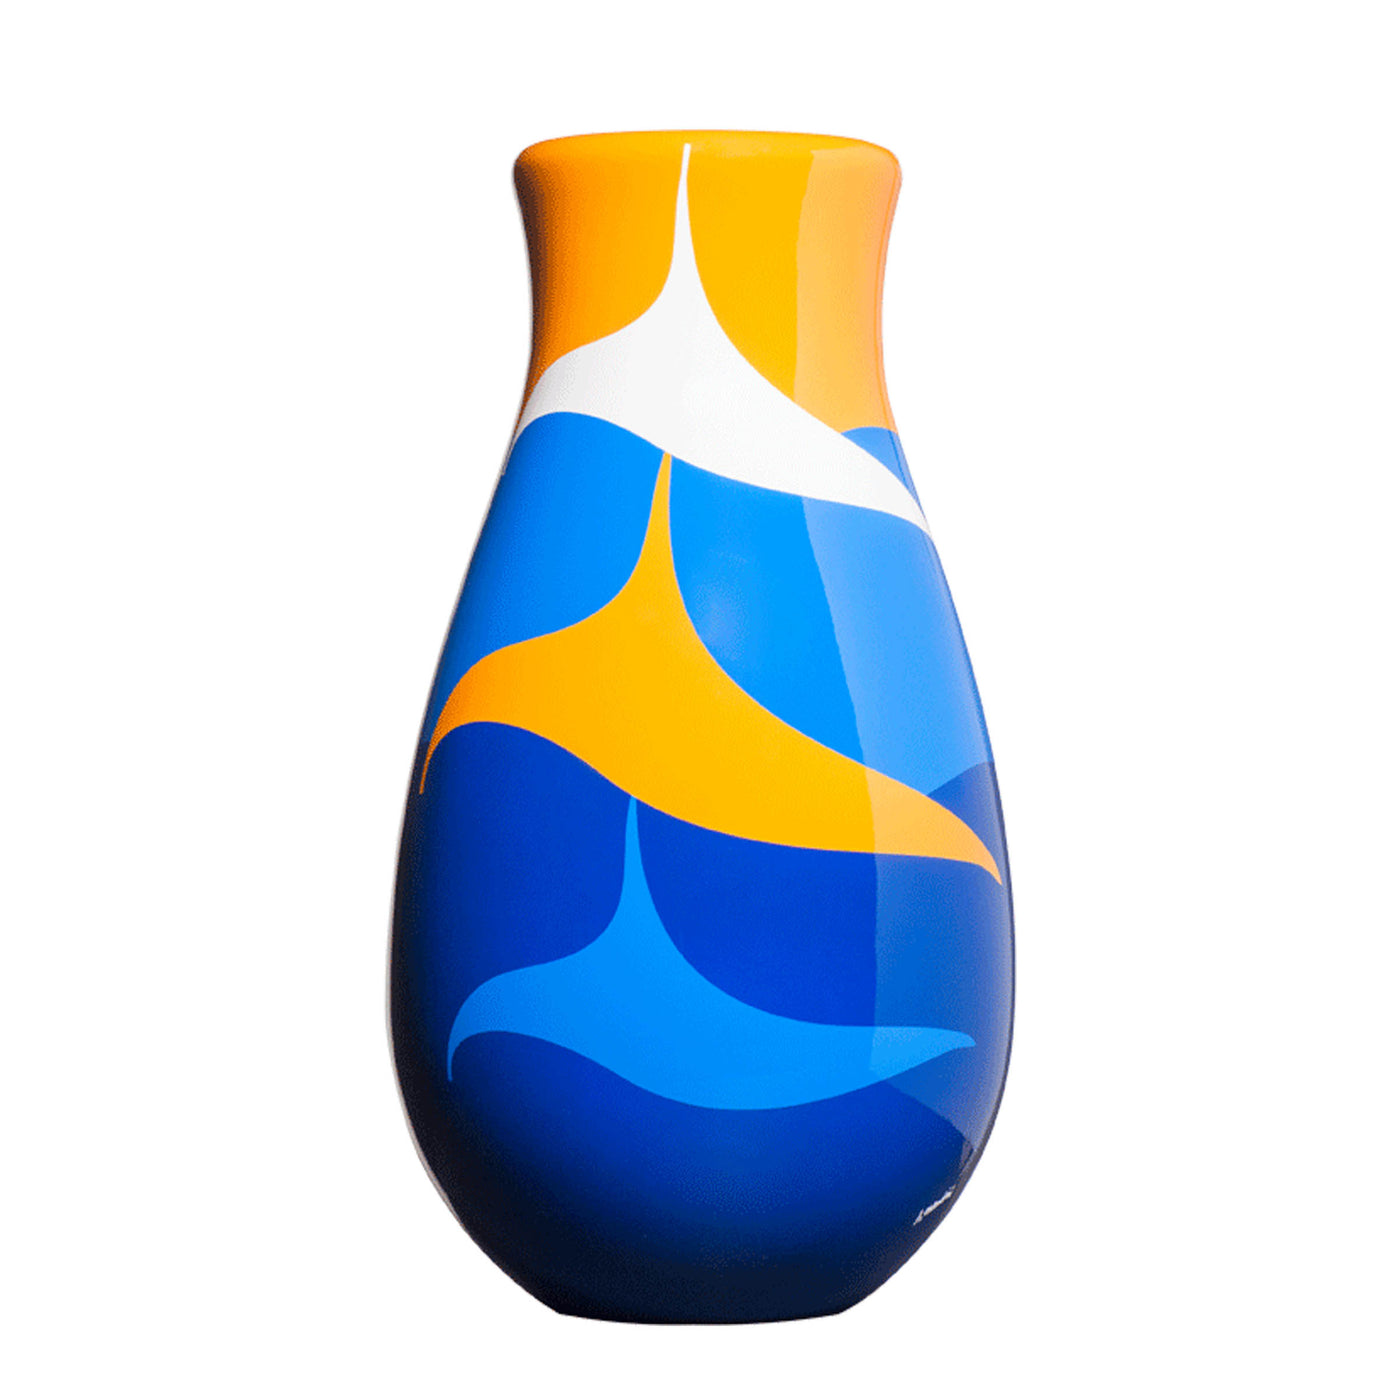 Fiberglass Vase HUNAN-SEOUL by Alessandro Mendini for Mendinismi - Limited Edition 01